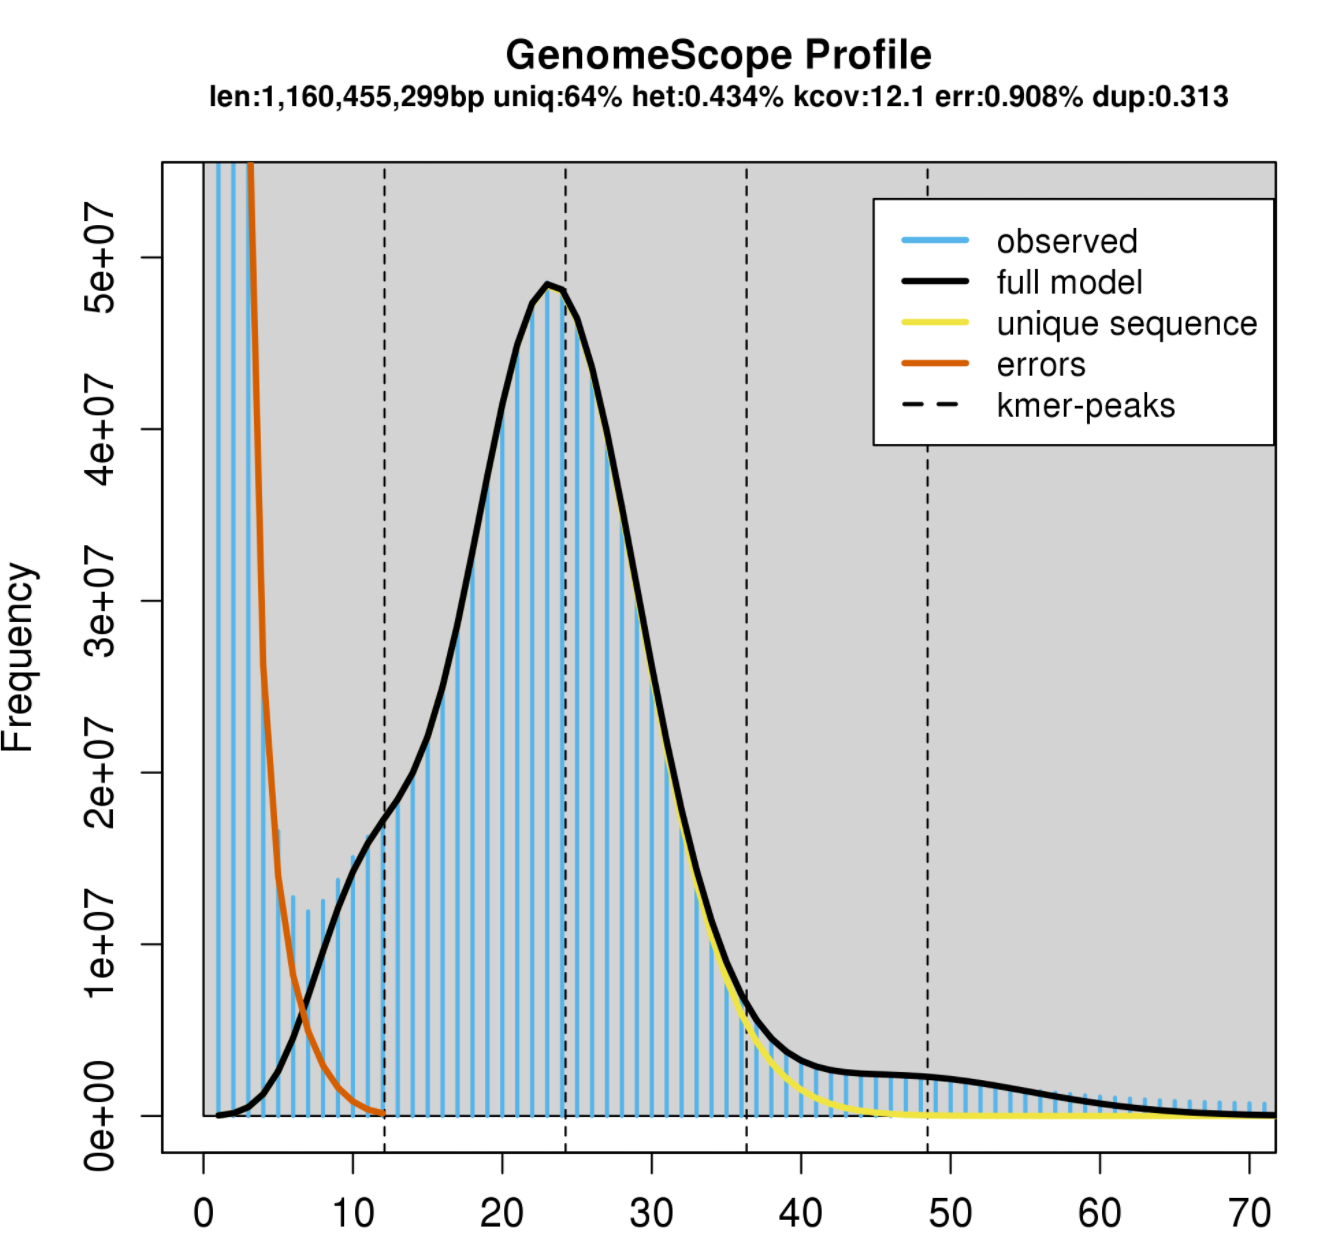 GenomeScope plot for a relatively low heterozygosity individual